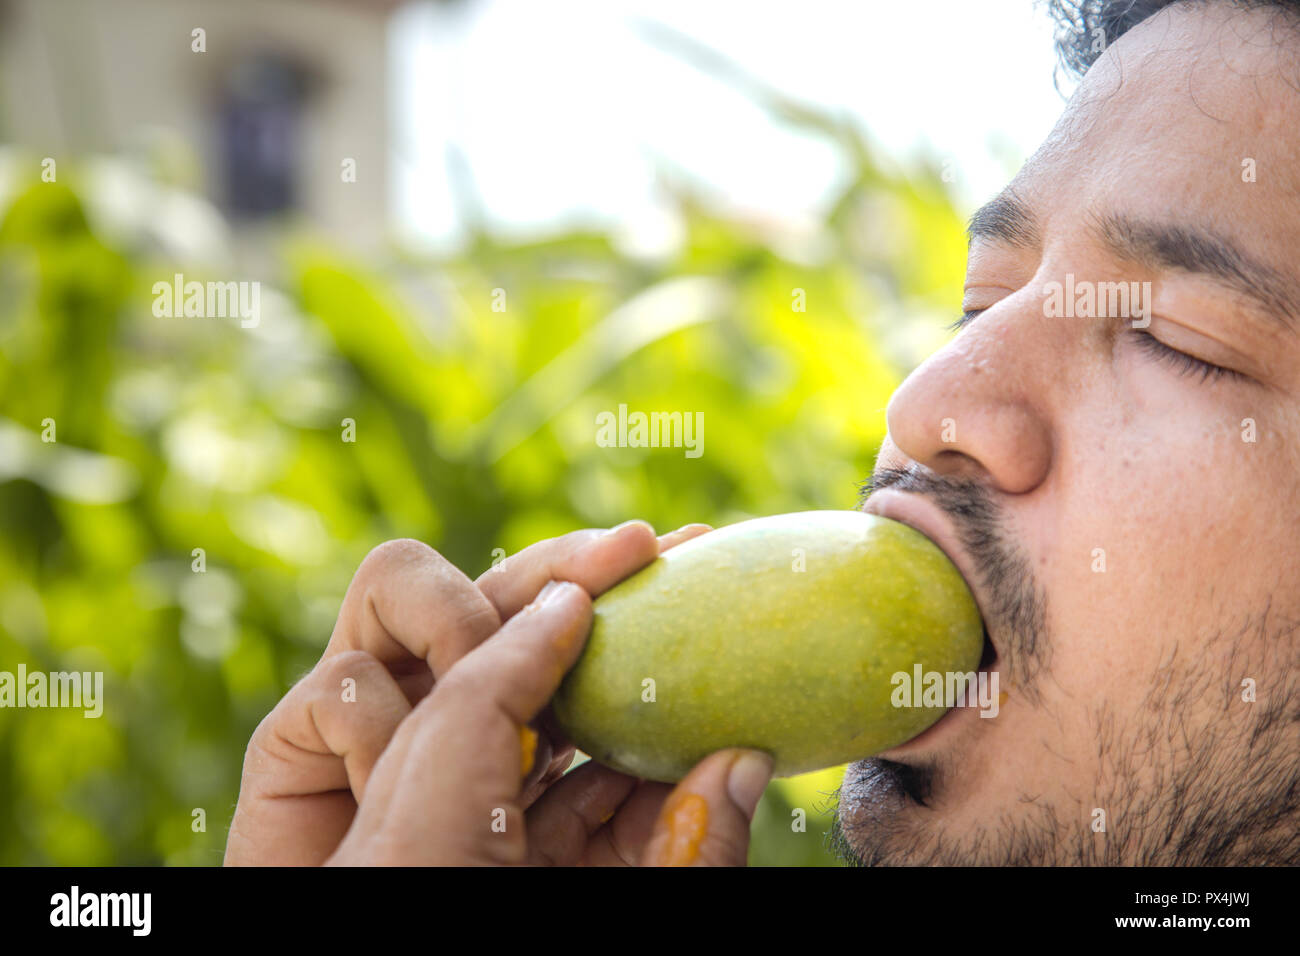 Indian man eating mango Stock Photo - Alamy